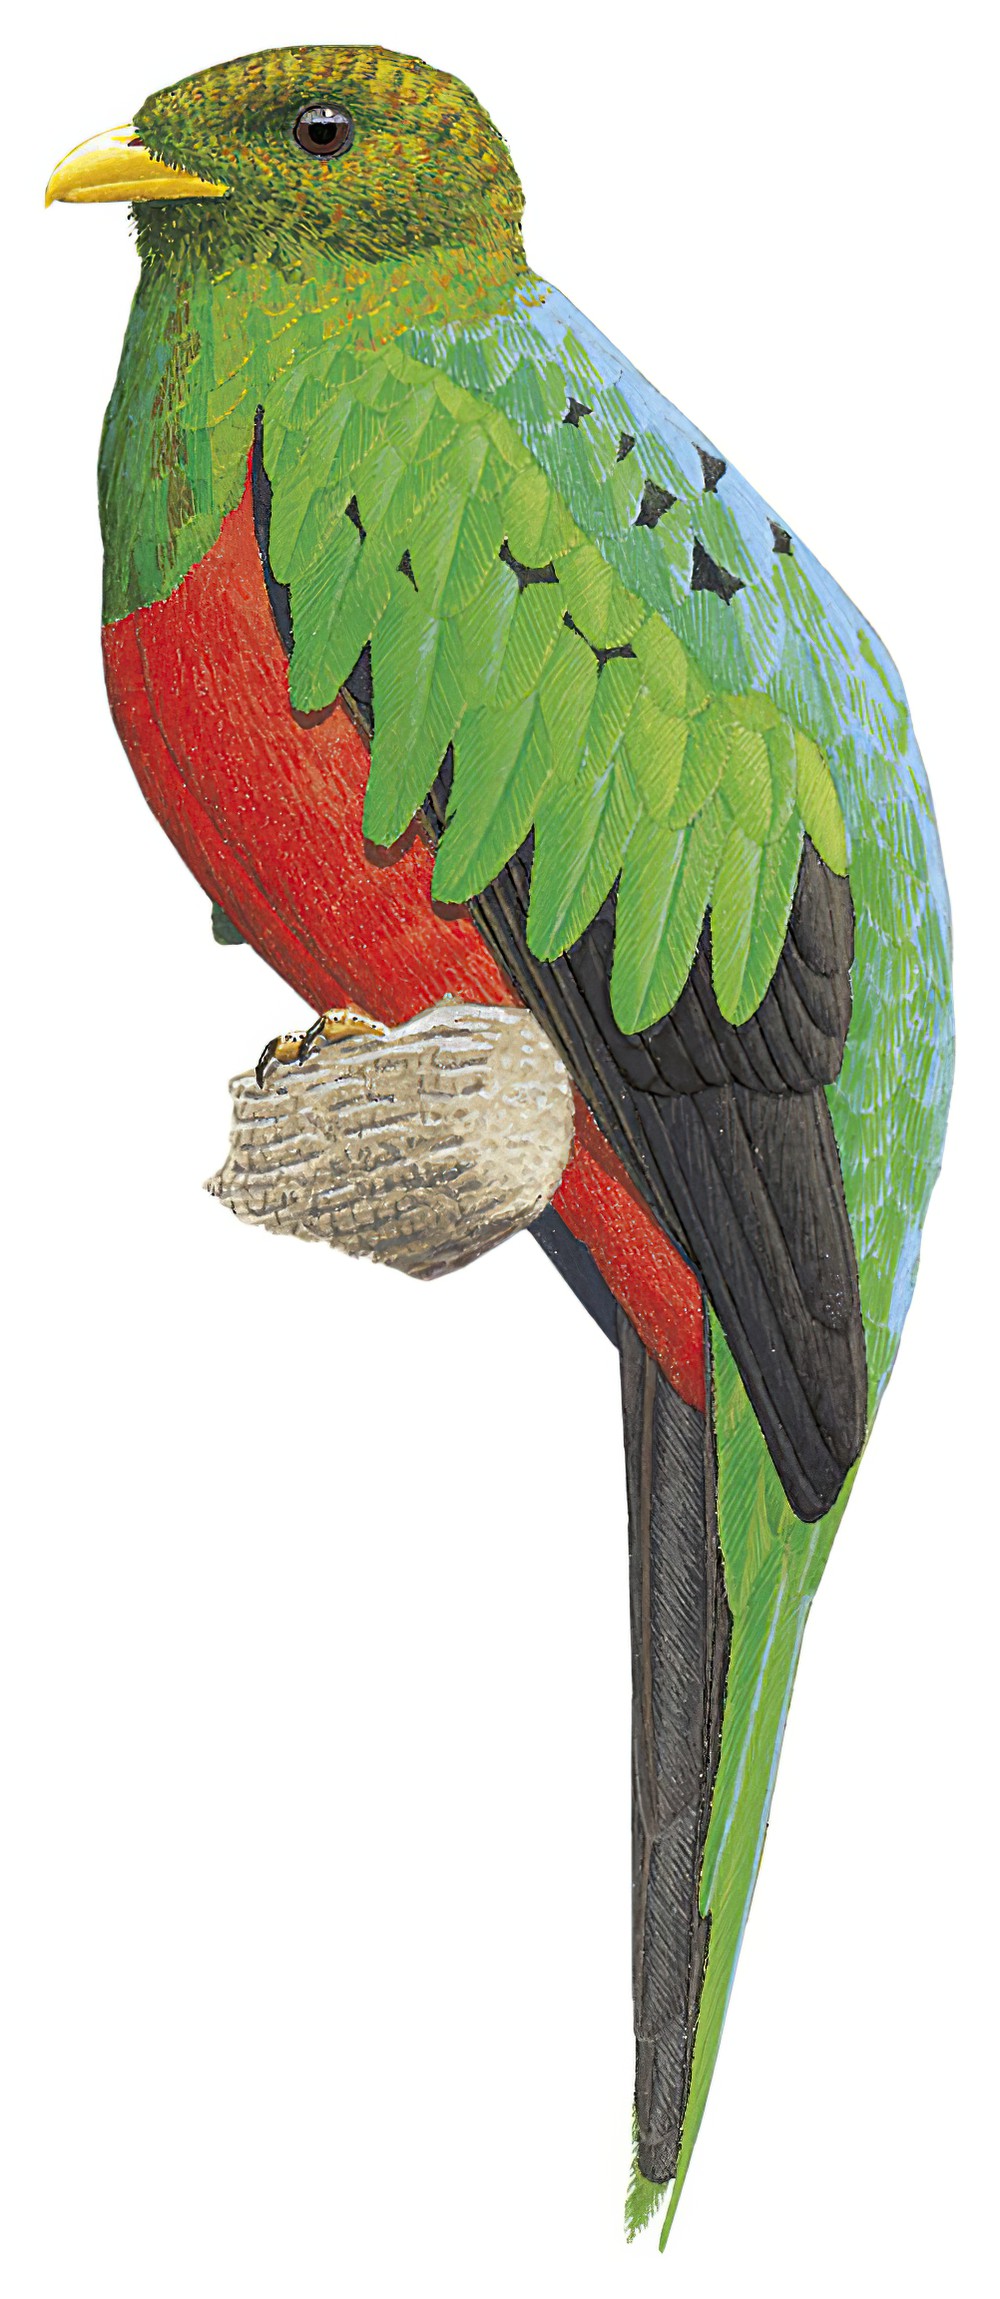 Golden-headed Quetzal / Pharomachrus auriceps